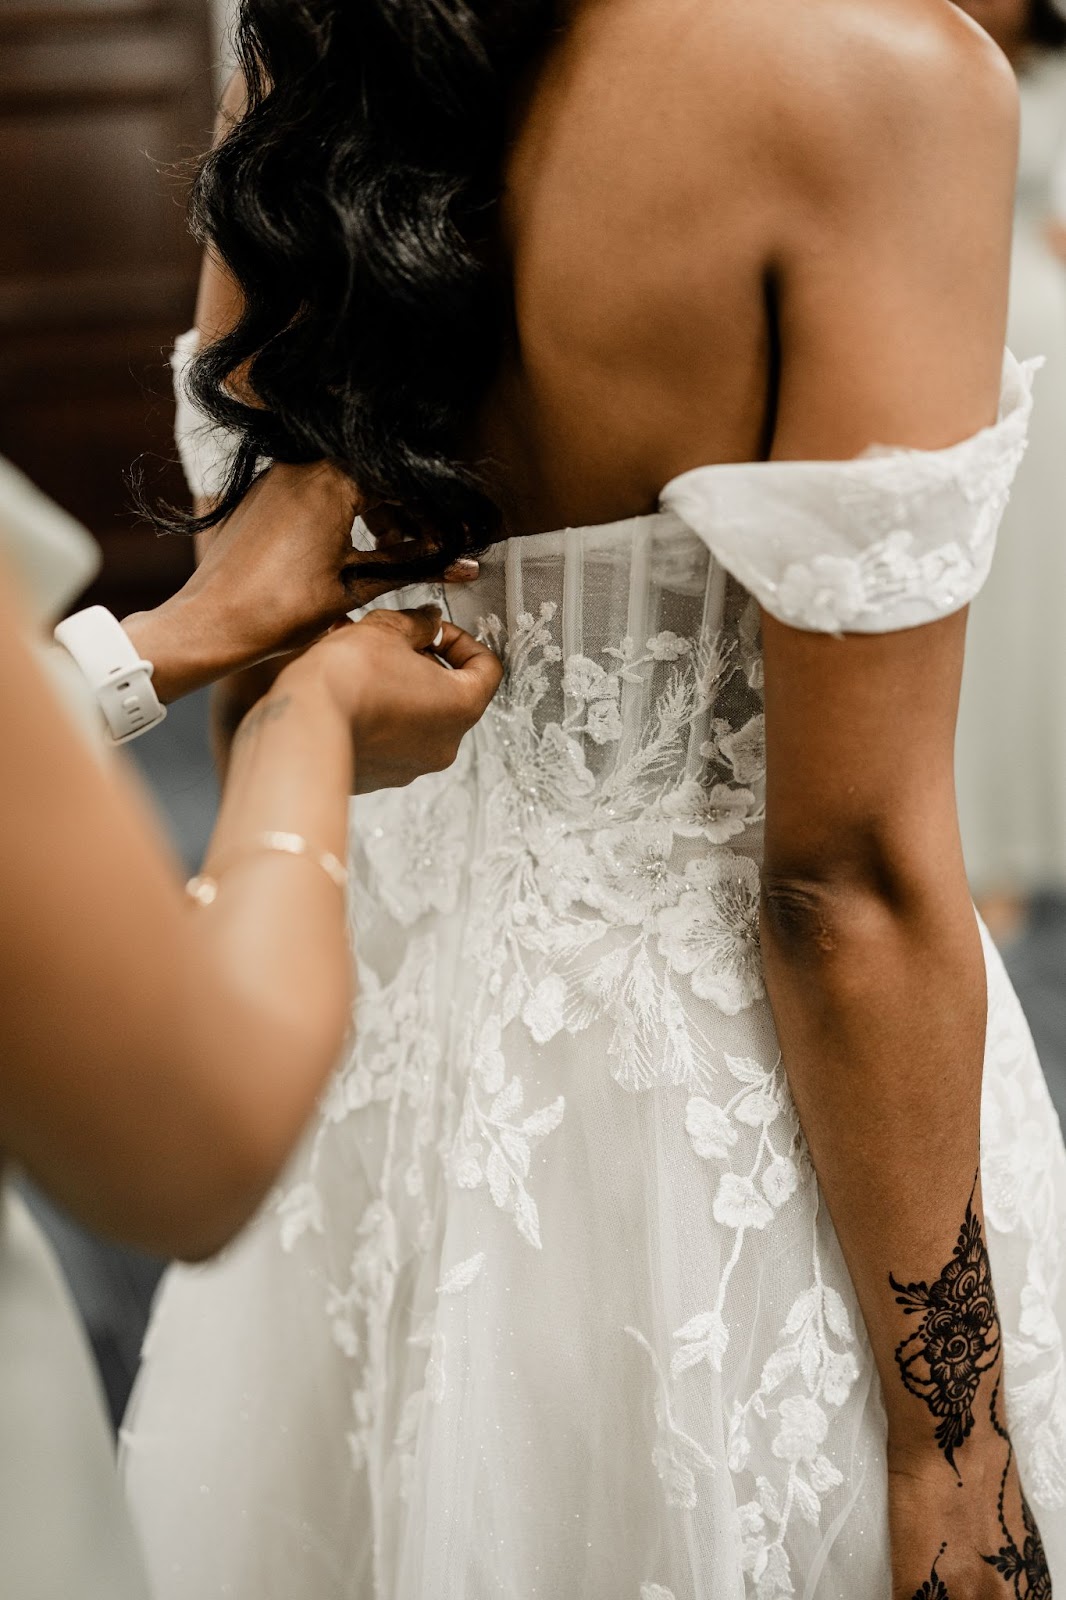 Bride's dress being zipped up